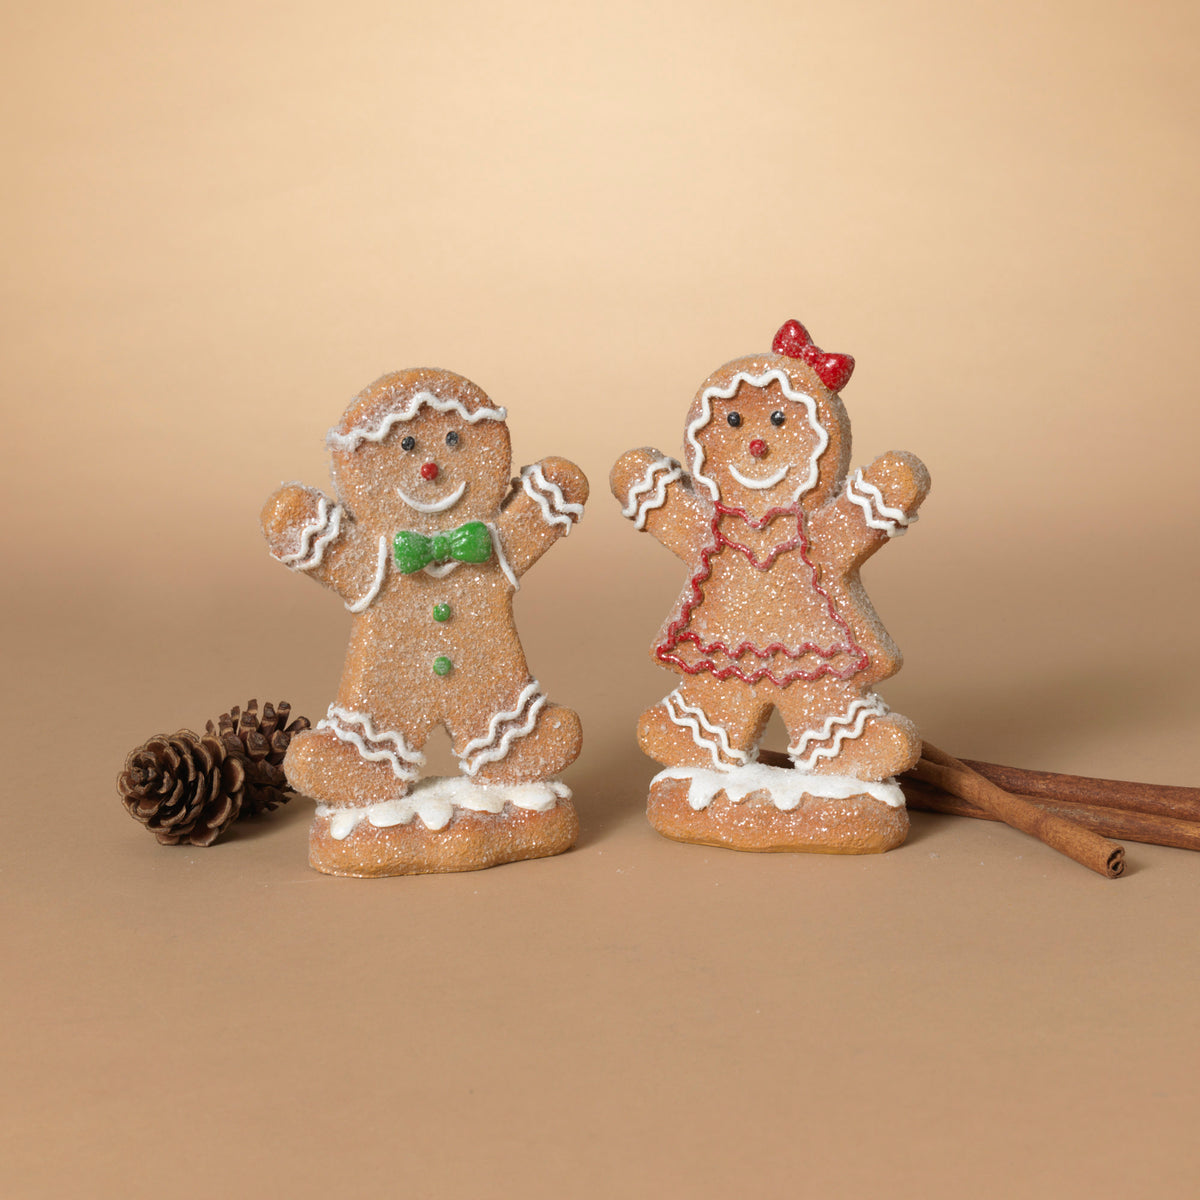 5.9"H Resin Gingerbread Figurine